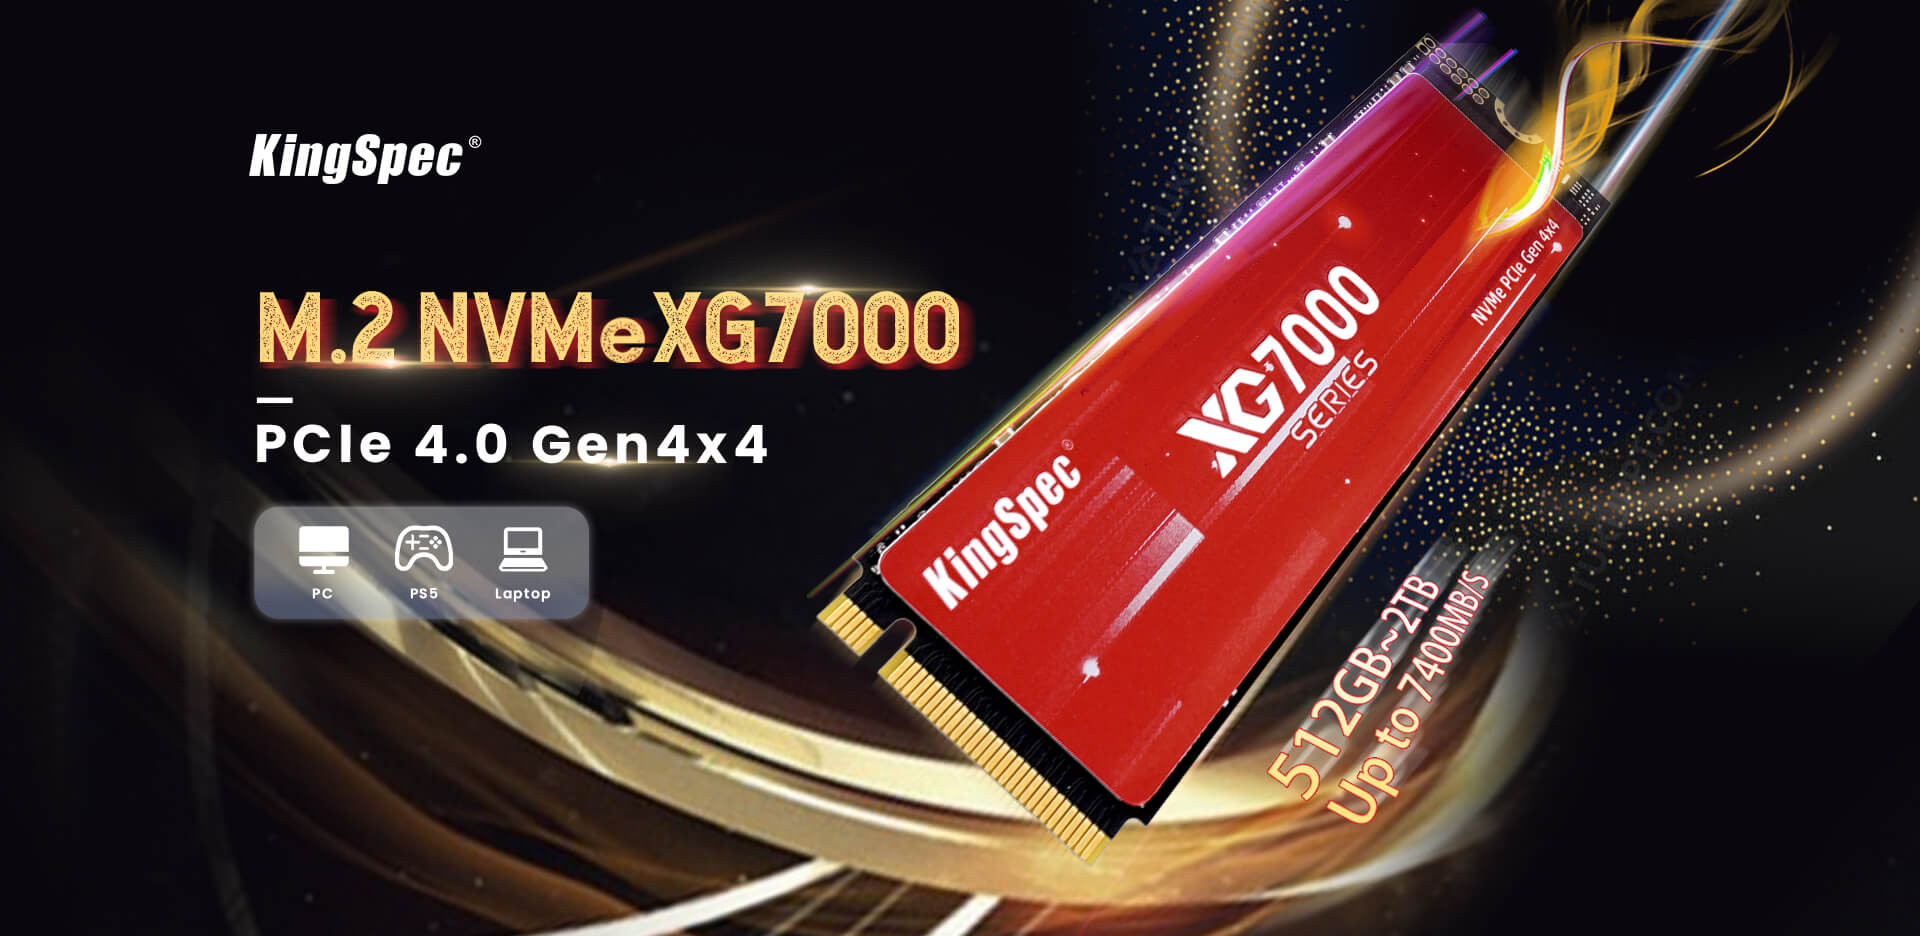 KingSpec M2 SSD NVMe 1TB M.2 2280 PCIe Gen 3.0X4 SSD Internal